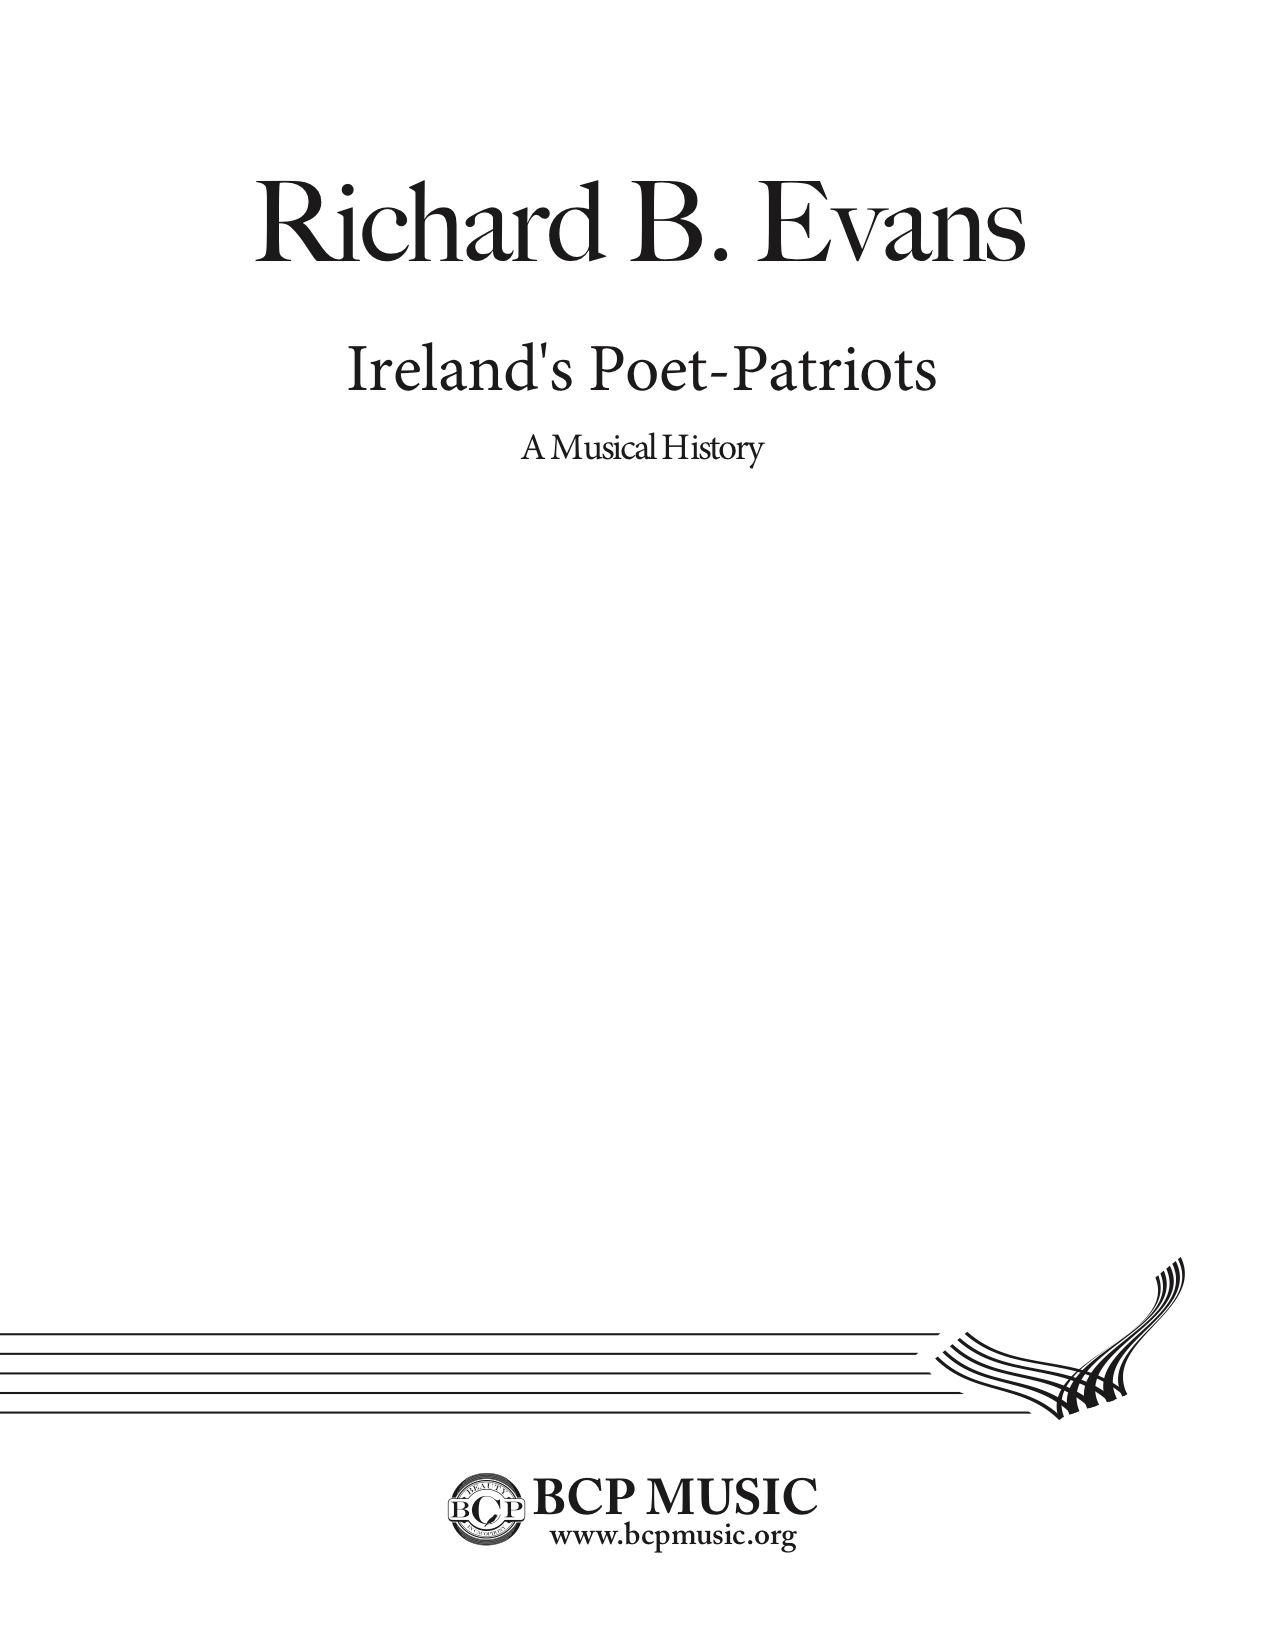 Richard B. Evans - Ireland's Poet-Patriots